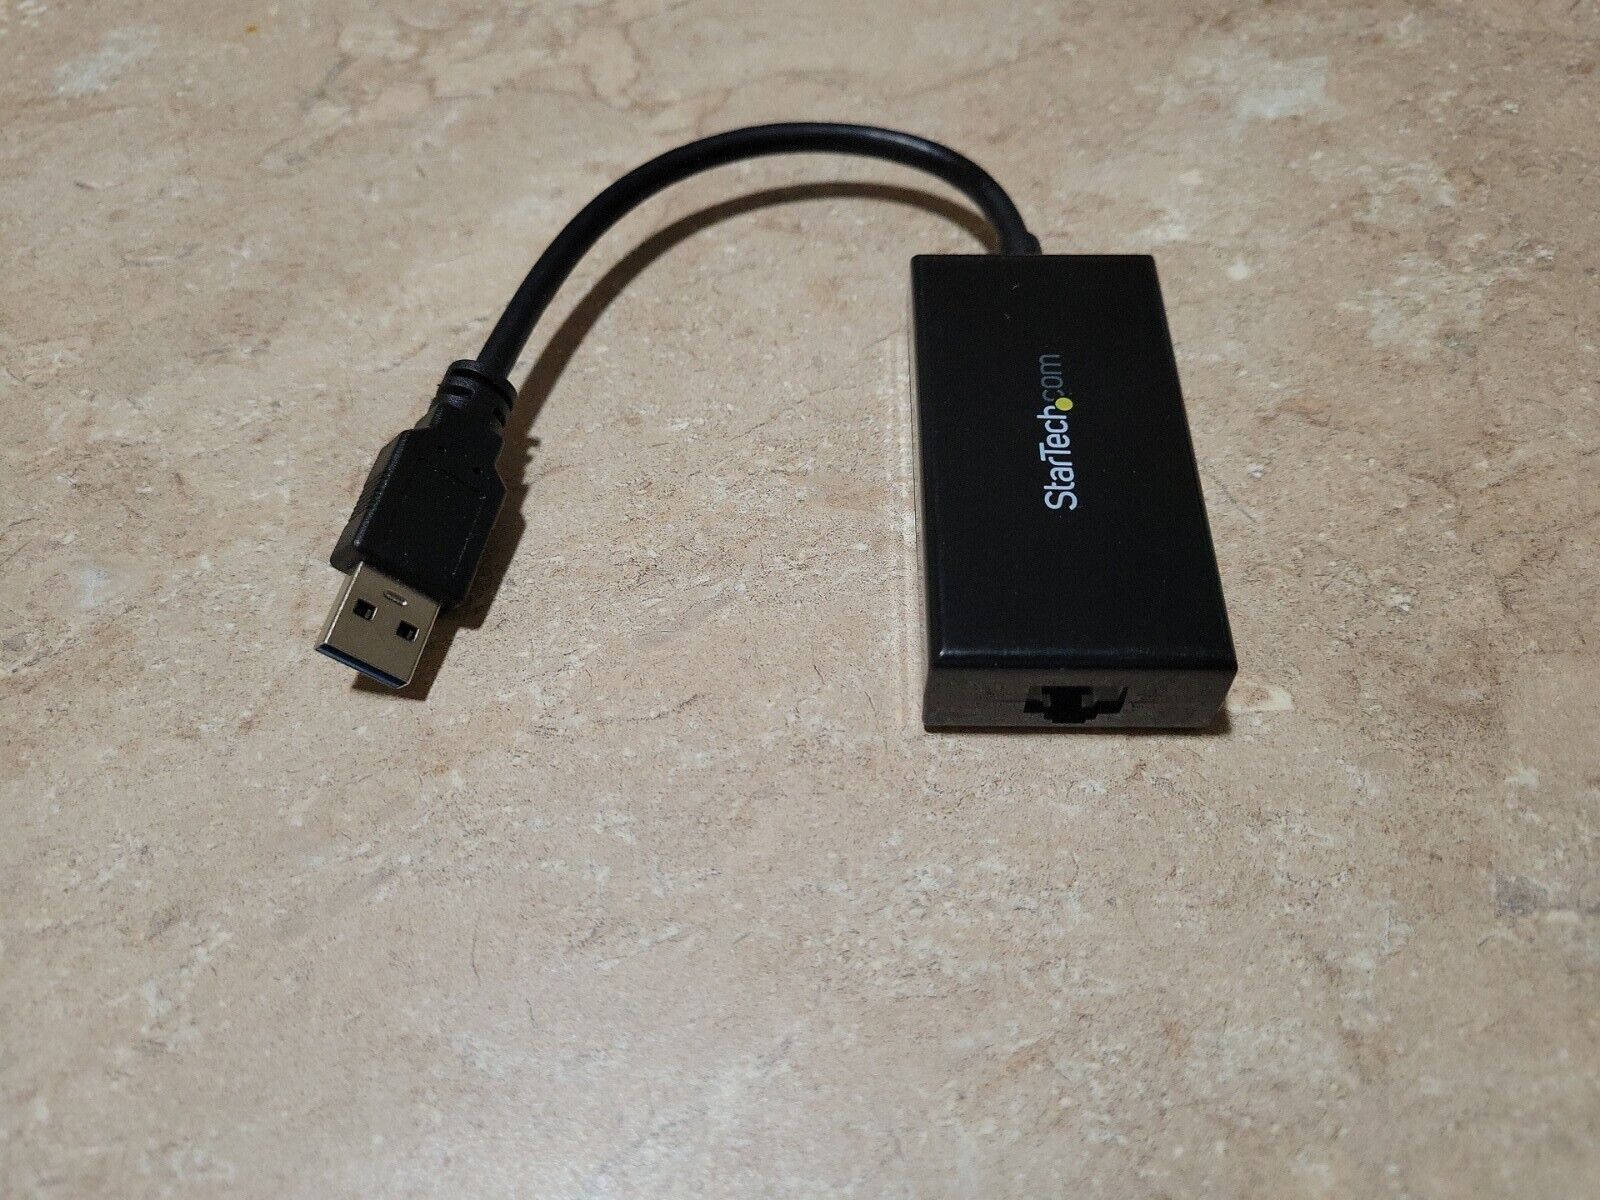 Startech USB 3.0 to Gigabit Network Adapter built in 2-port USB Hub-USB31000S2H